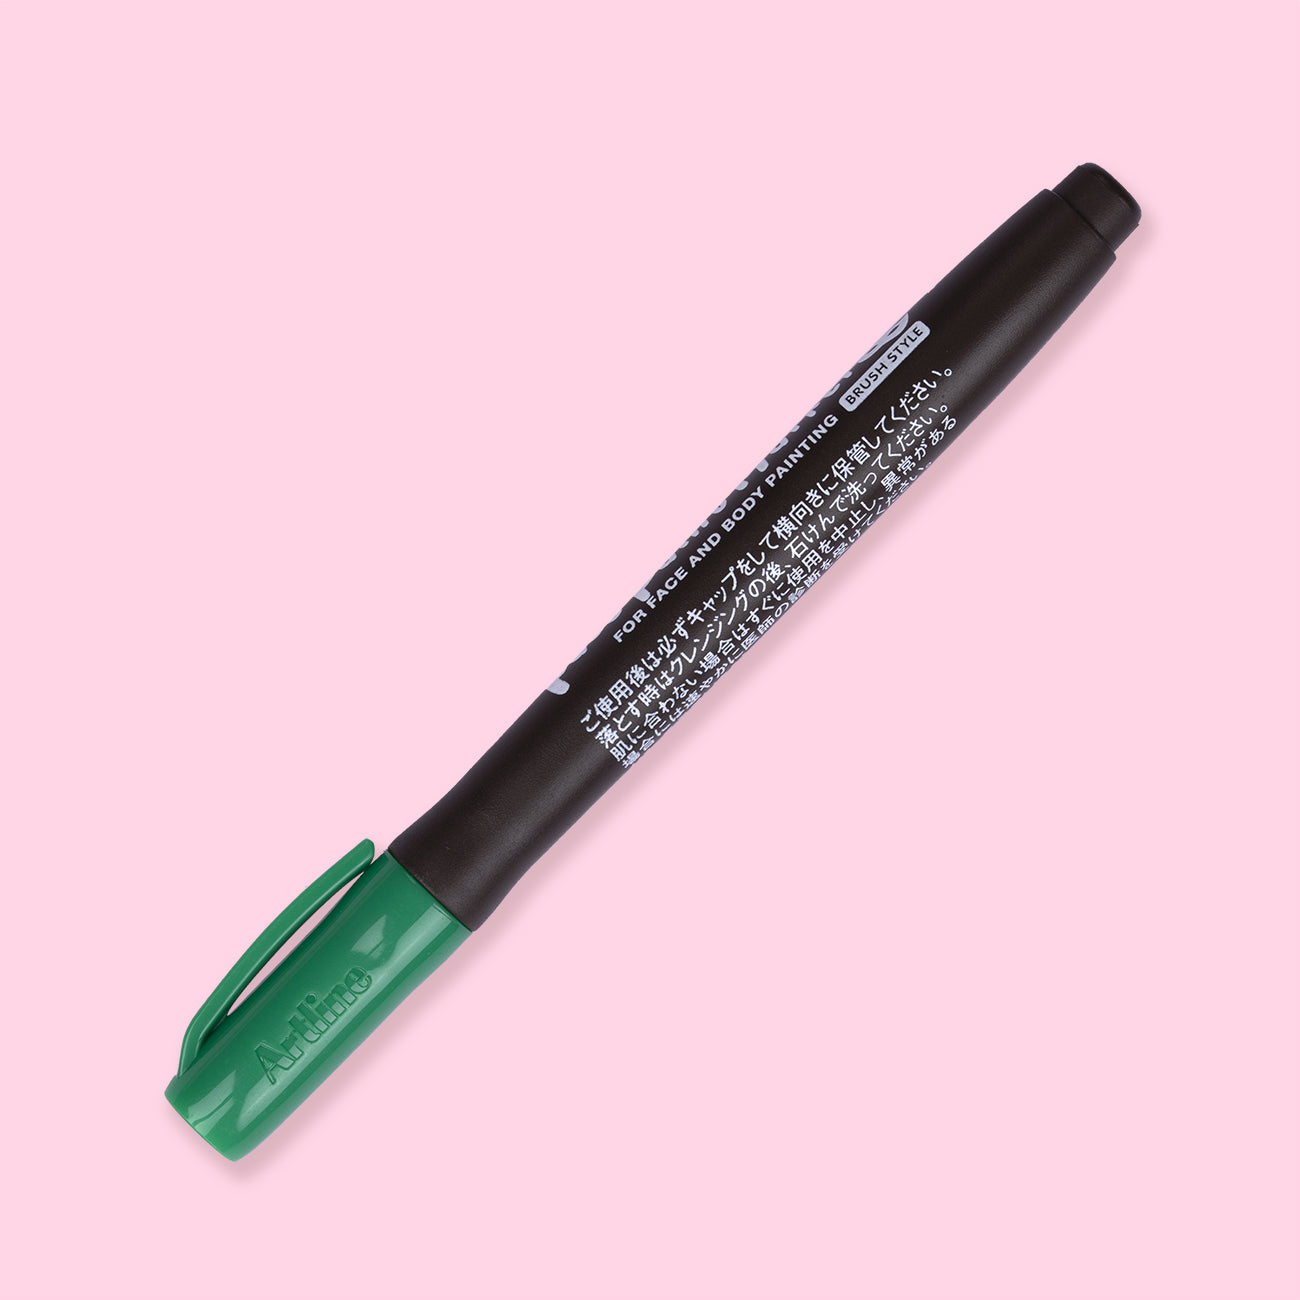 Shachihata Face Paint Brush Marker - Pastel Green